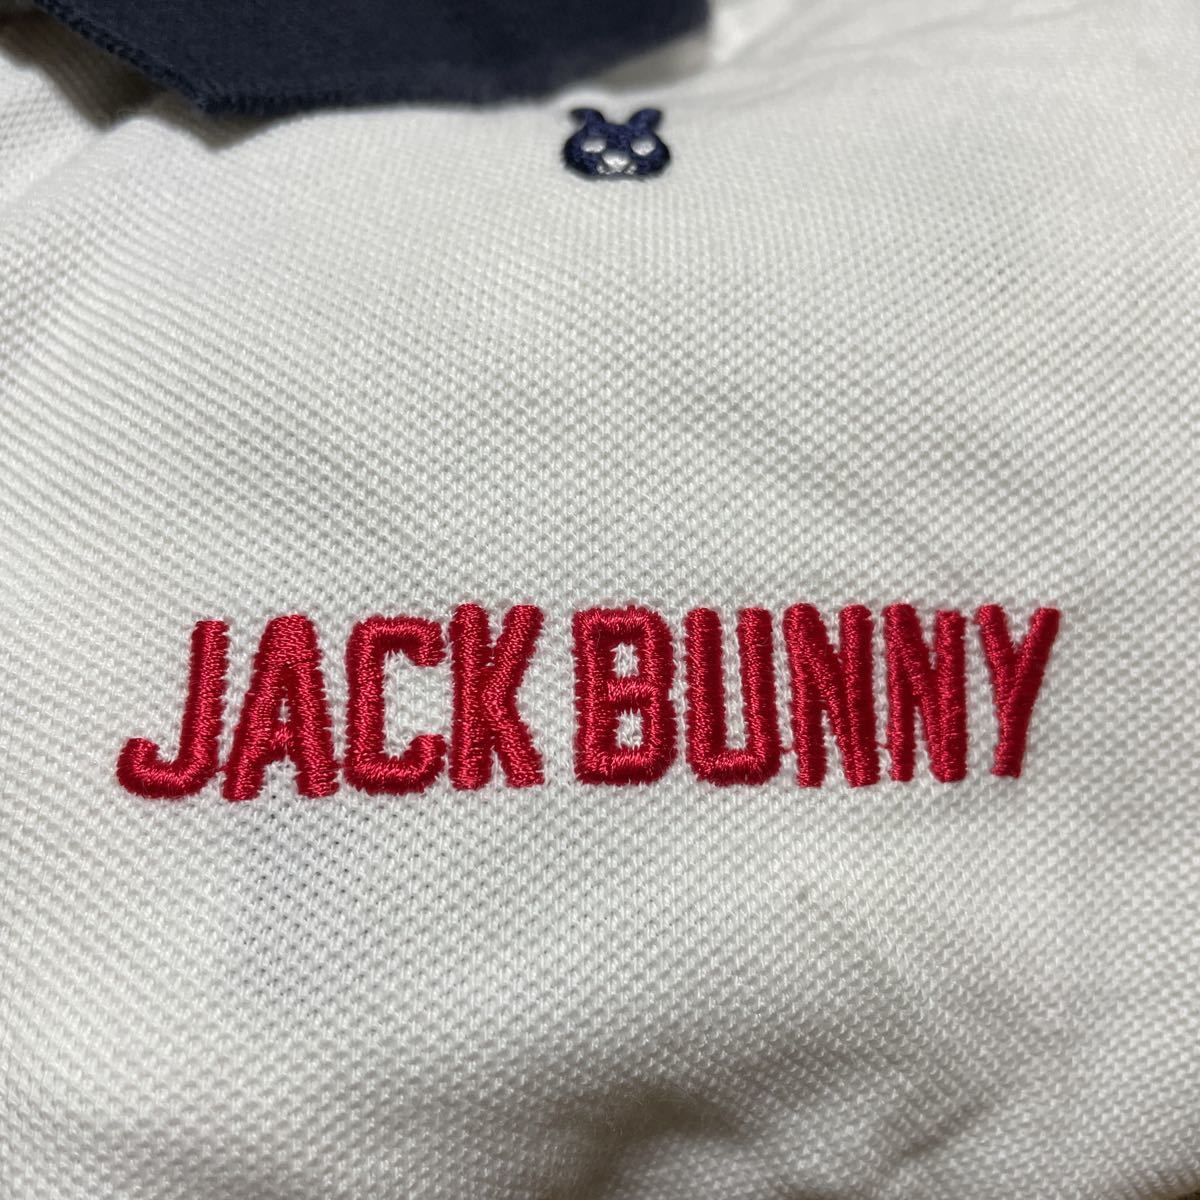 JACK BUNNY by PEARLY GATES ジャックバニー パーリーゲイツ ロゴ刺繍 総柄 バニー刺繍 ポロシャツ ホワイト 4_画像4